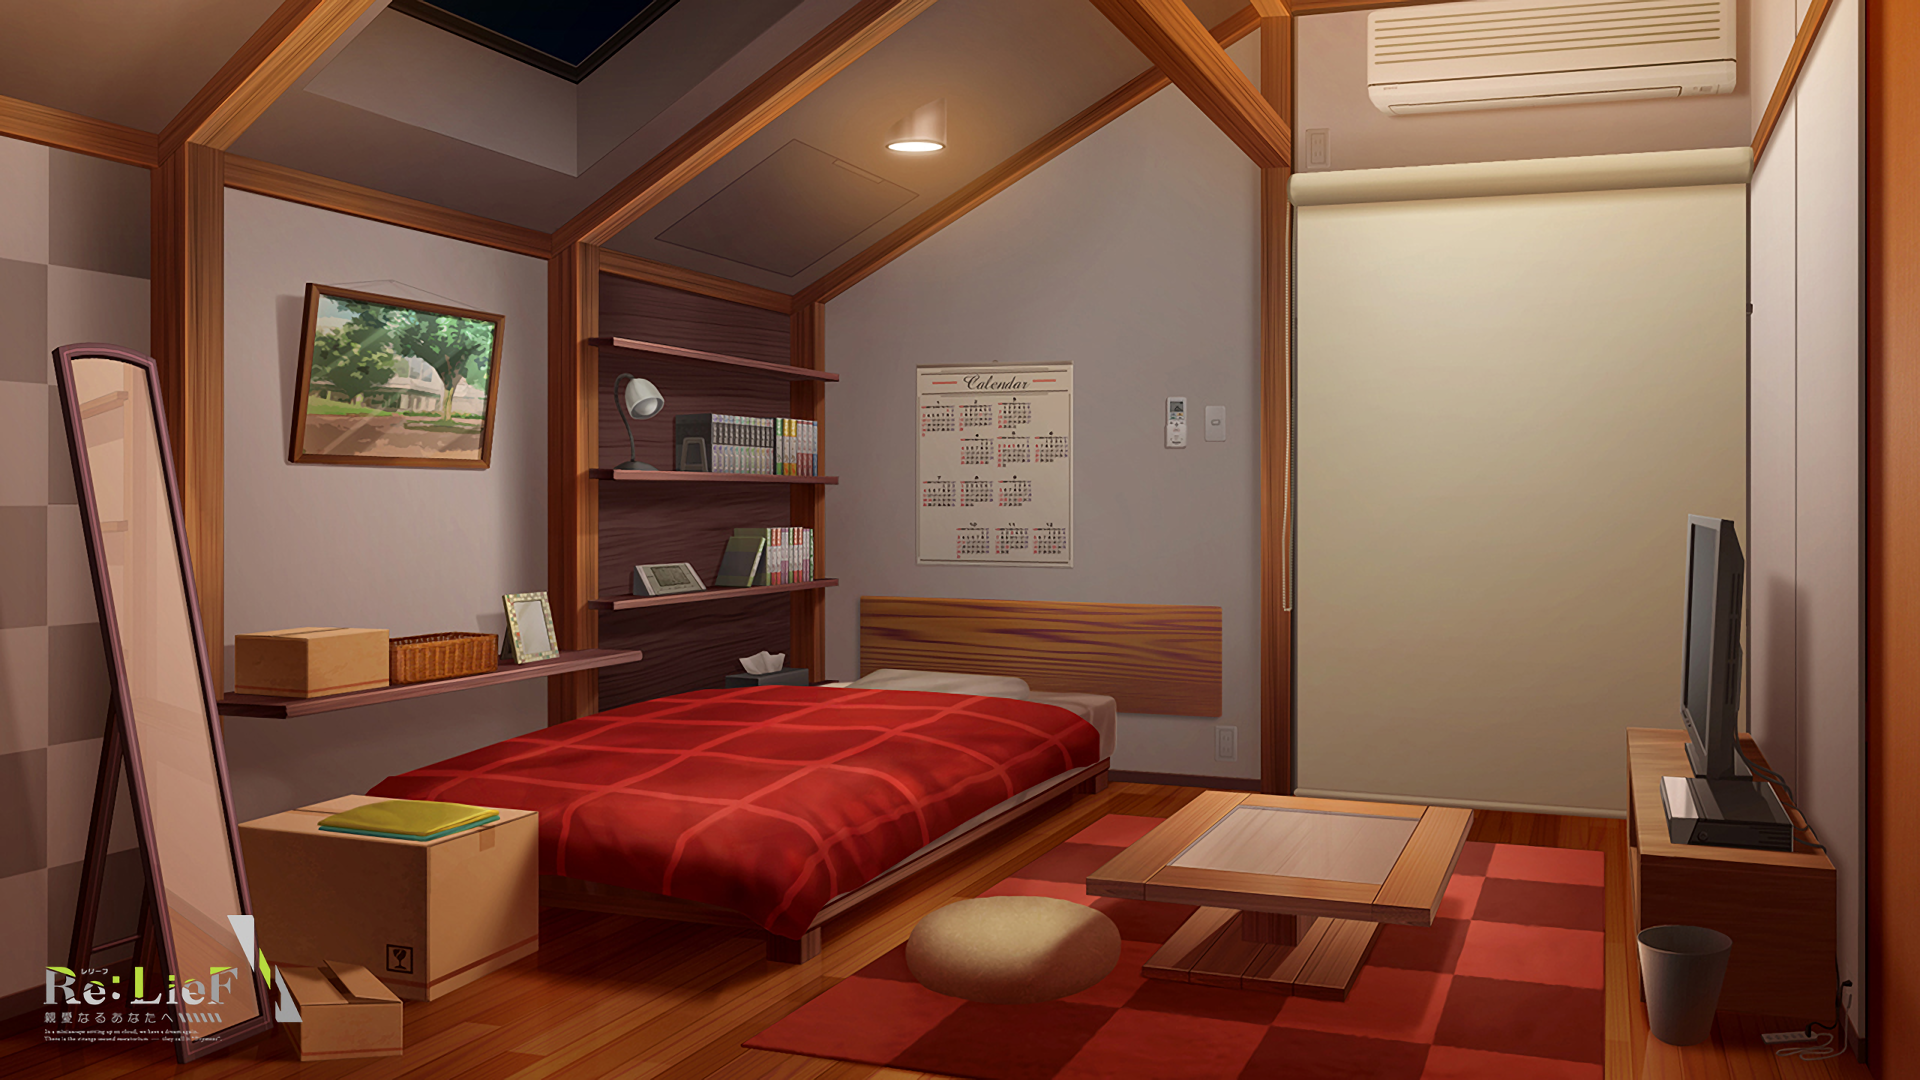 anime bedroom wallpaper,room,furniture,bedroom,interior design,bed